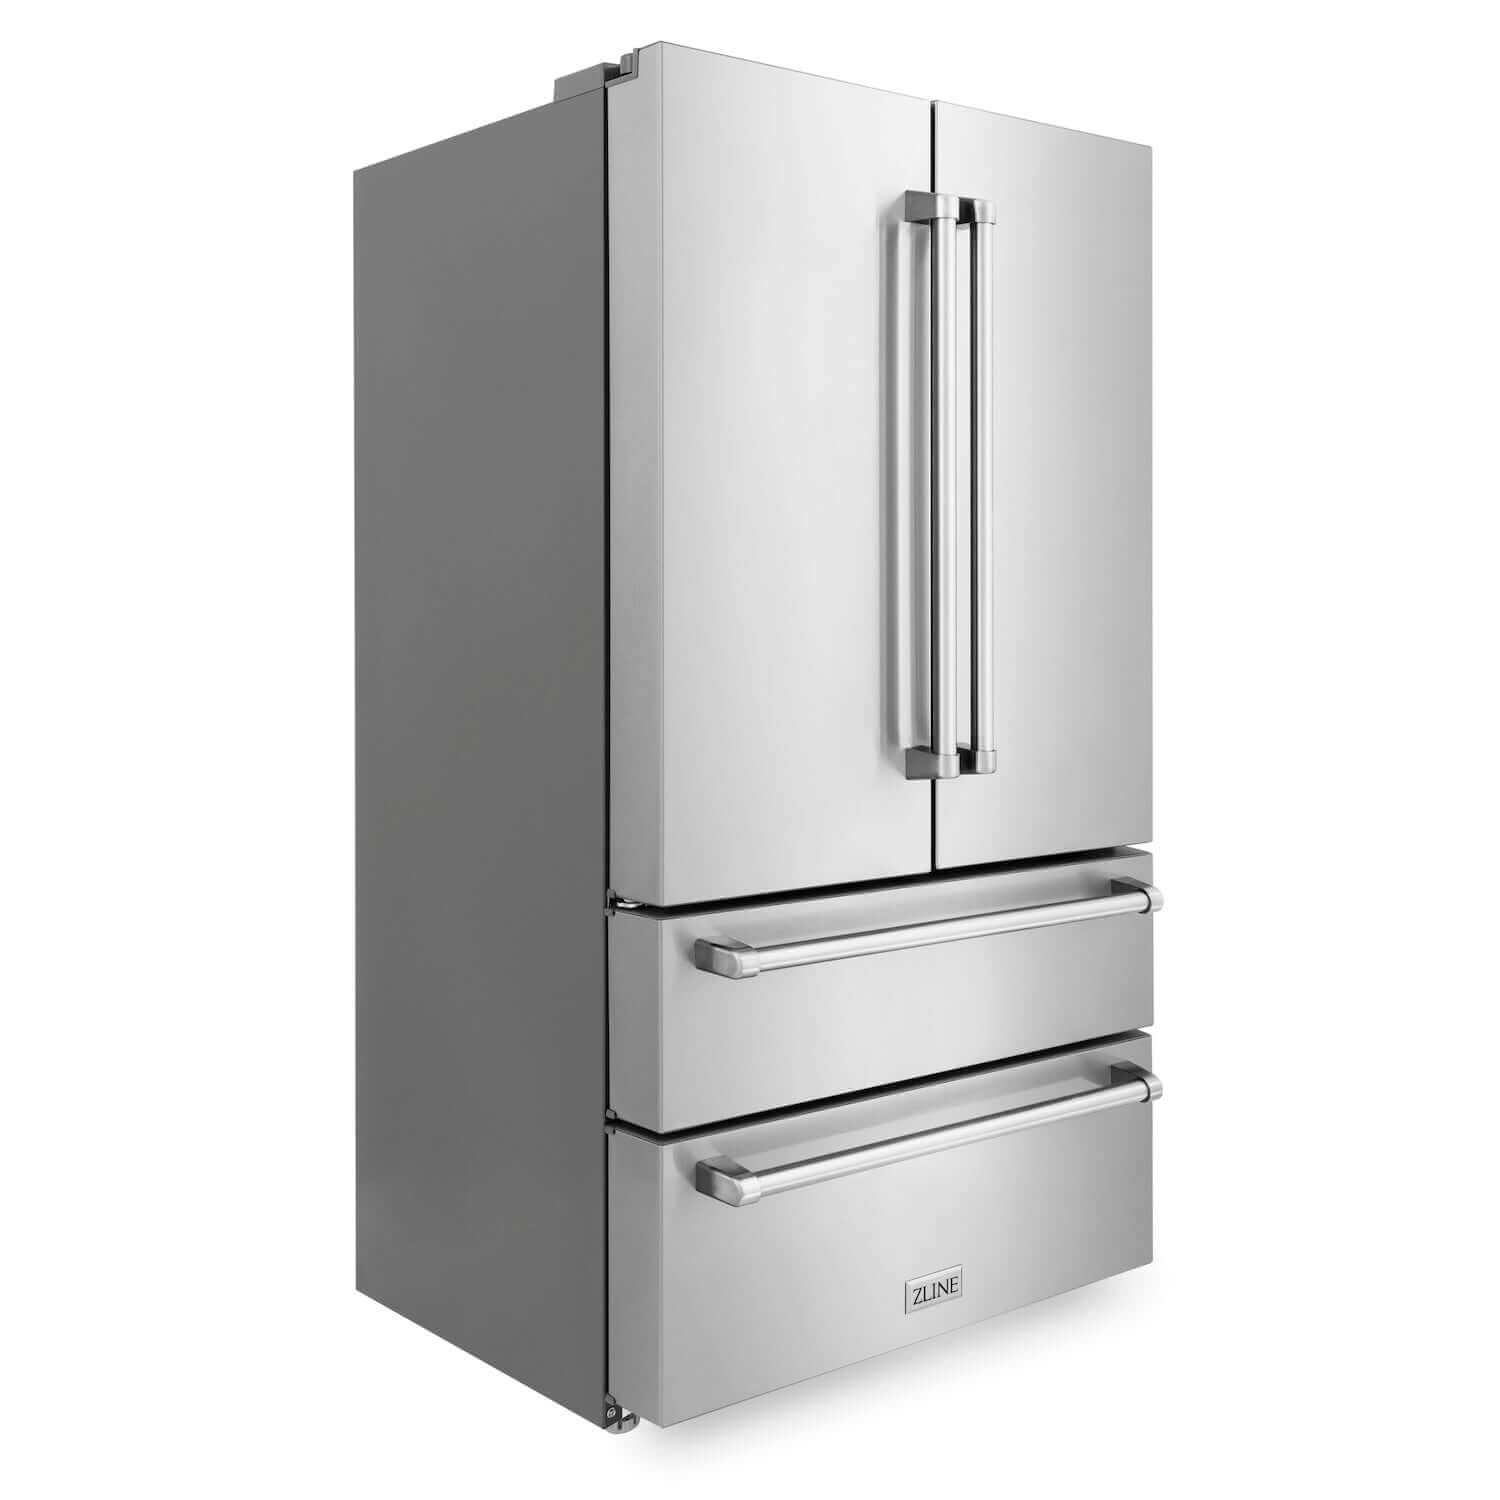 ZLINE 36" Stainless Steel French door counter-depth refrigerator side view.